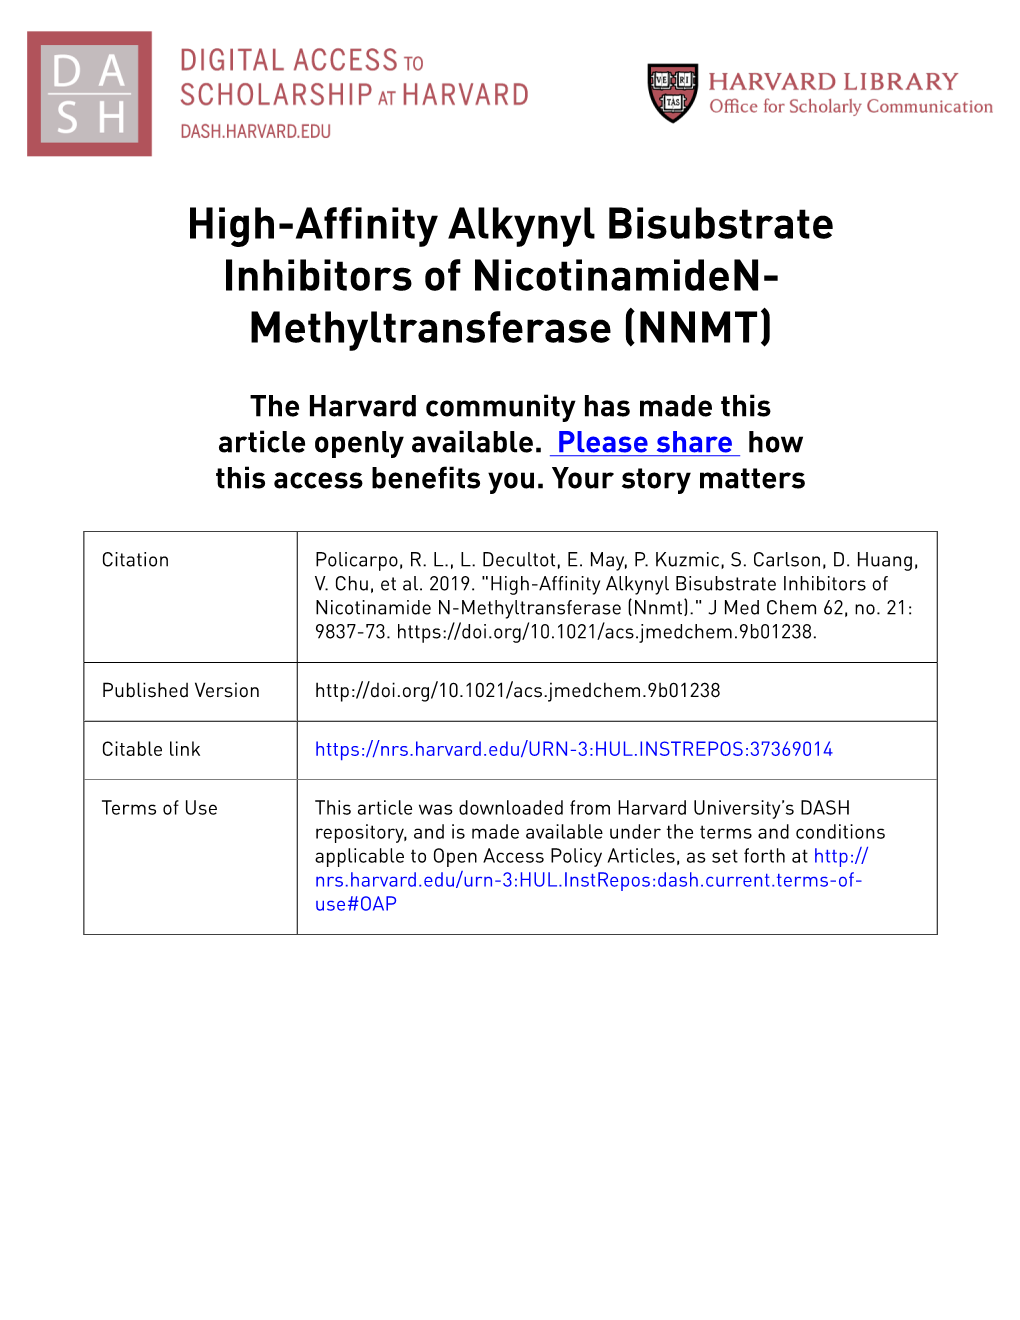 Methyltransferase (NNMT)